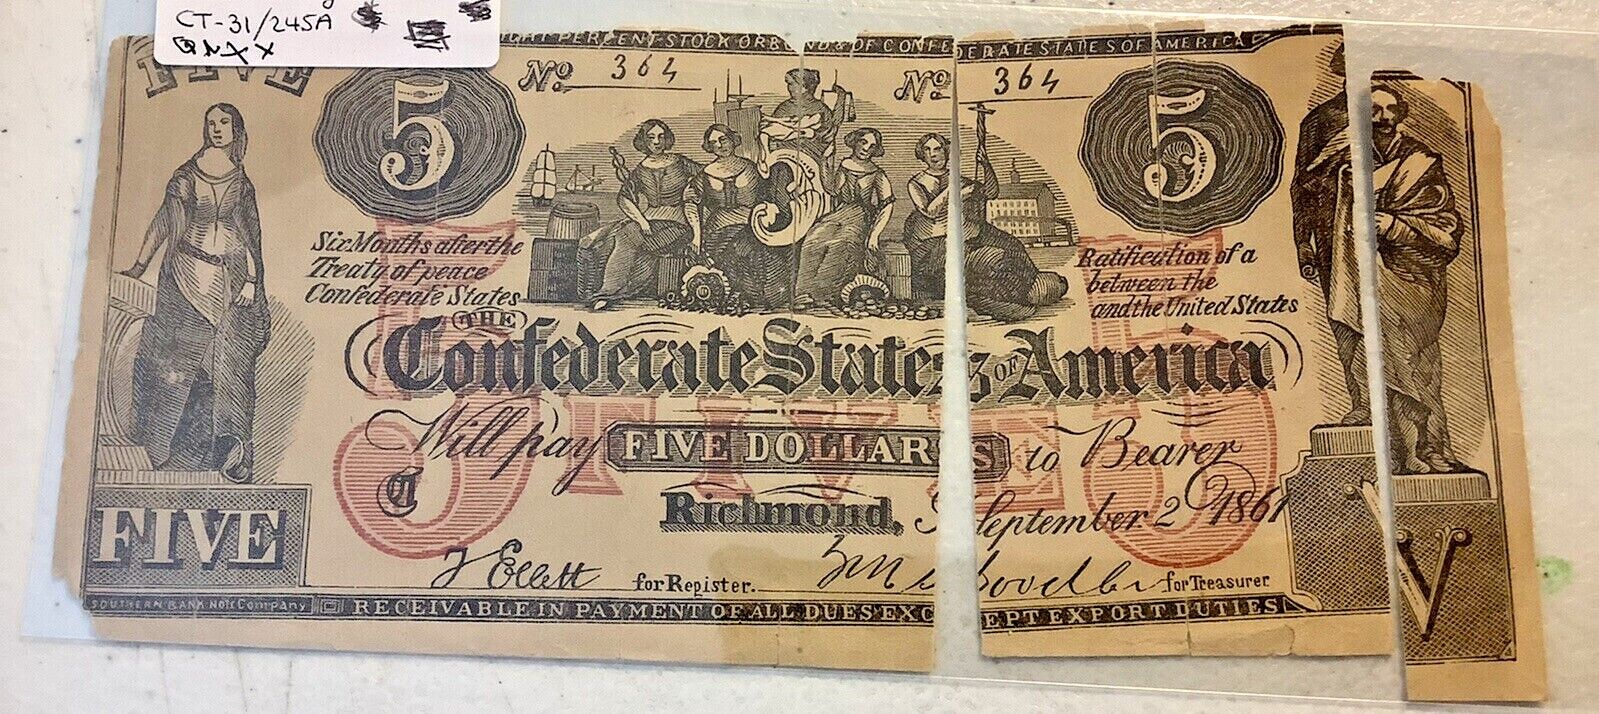 Confederate States Of America $5 Bill Ct-31 1861 Counterfeit